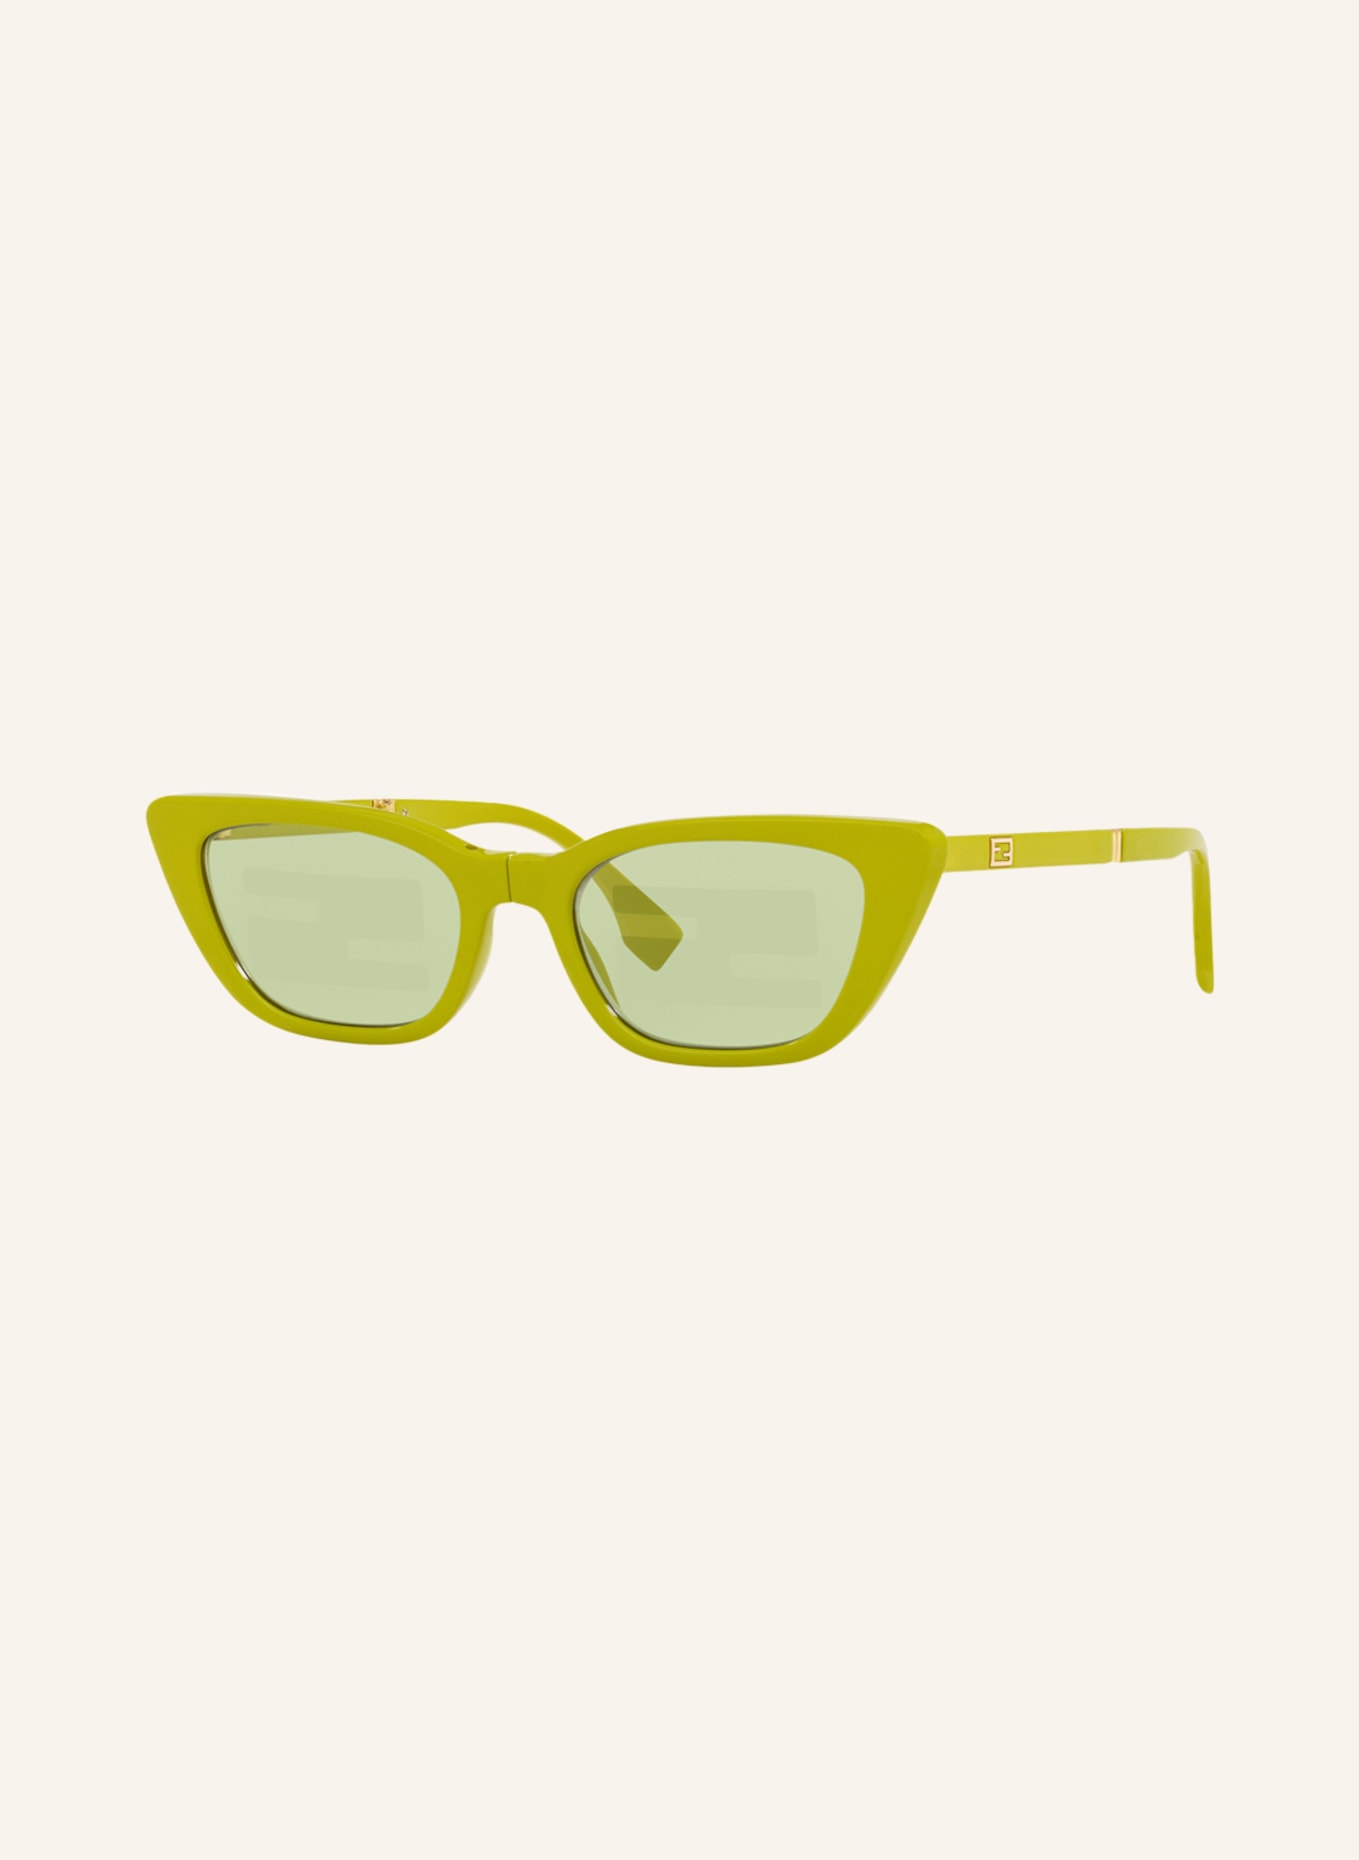 Fendi™ Fashion-Forward Glasses | Fendi sunglasses, Fendi, Eyewear  accessories